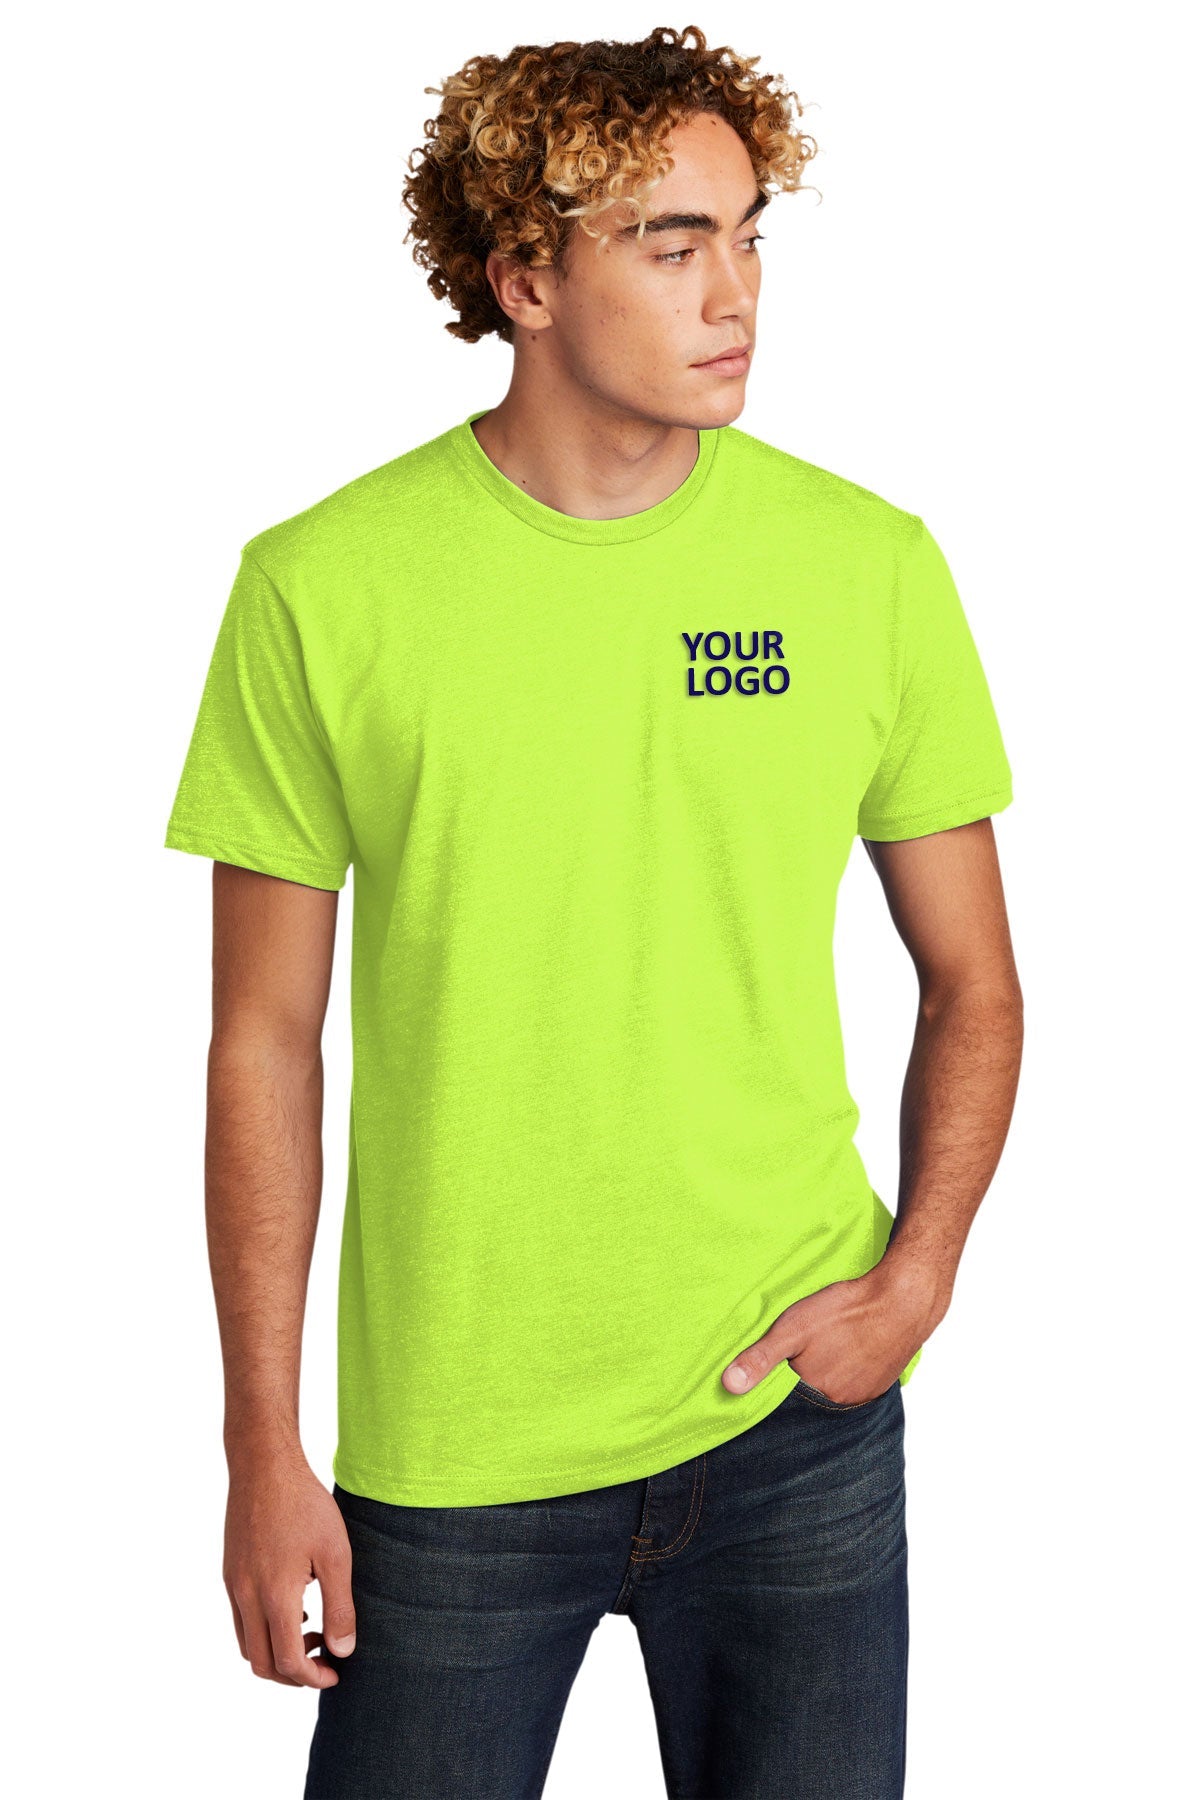 Next Level Unisex CVC Customized T-Shirts, Neon Yellow